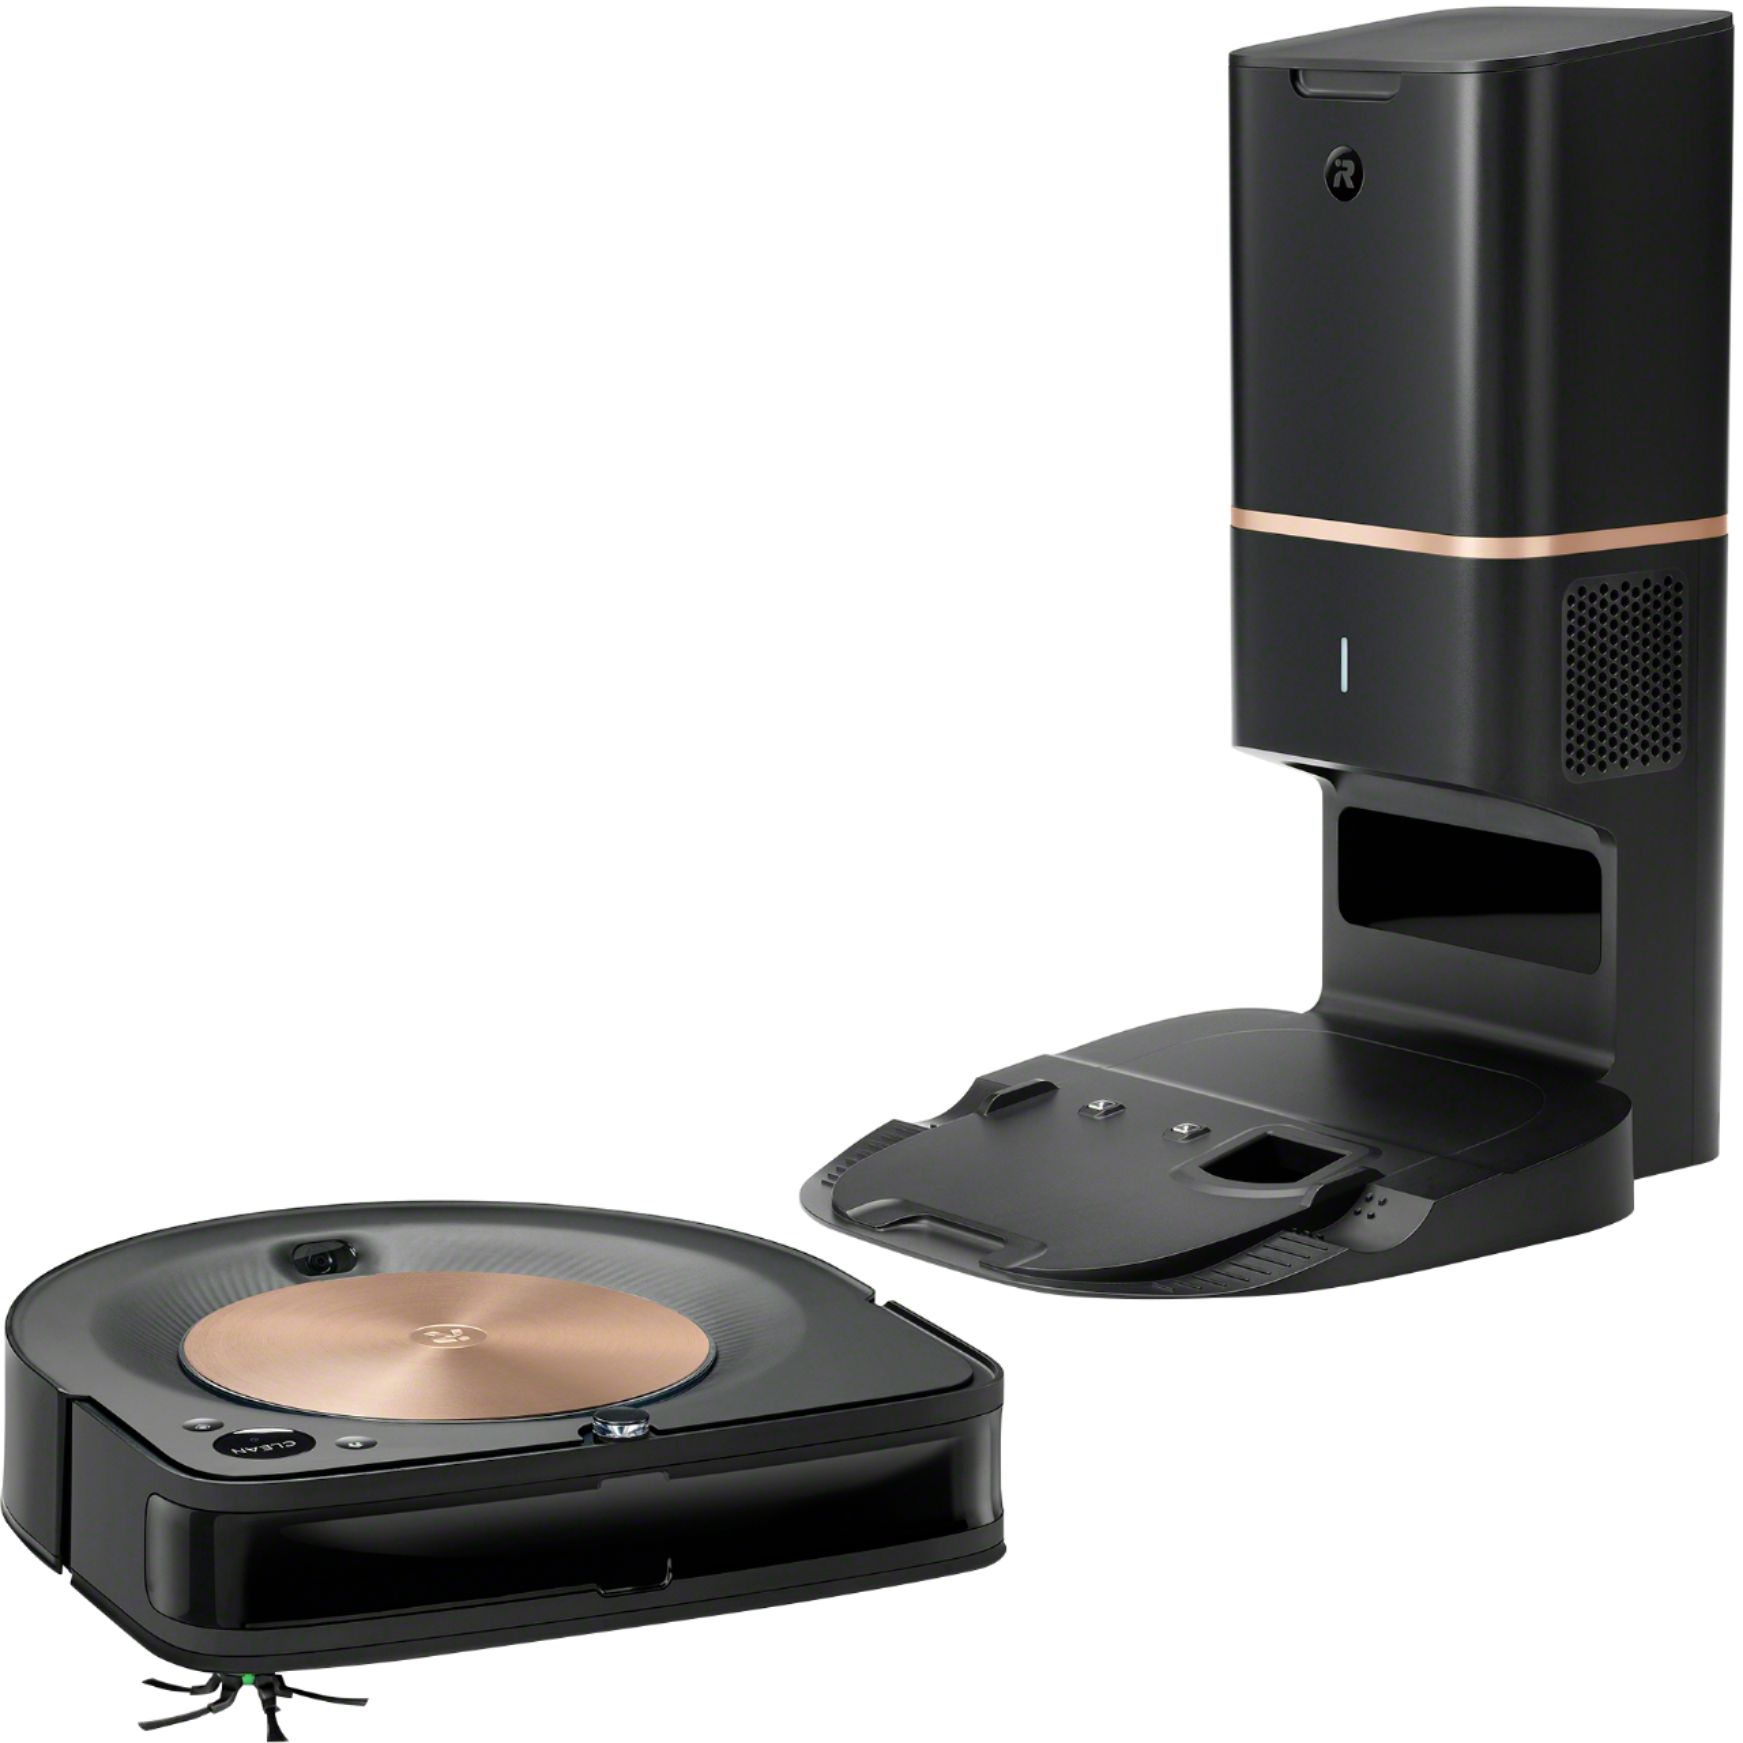 iRobot Roomba s9+ (9550) Wi-Fi Self-Emptying Robot Vacuum Java Black S955020 -